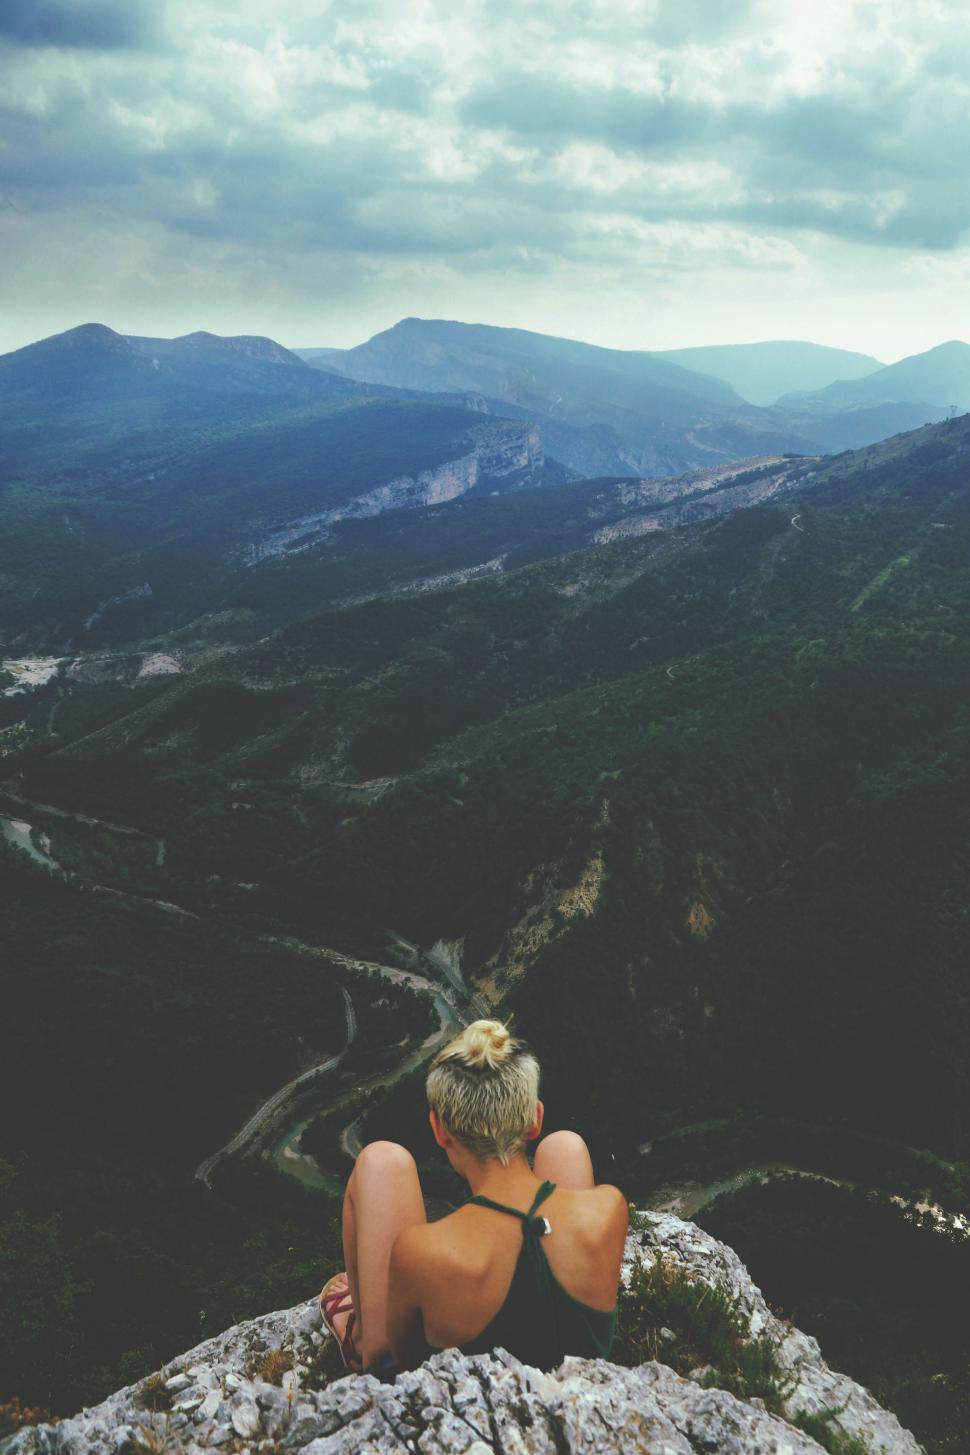 Free Image of Man Sitting on Rock Near Mountain 